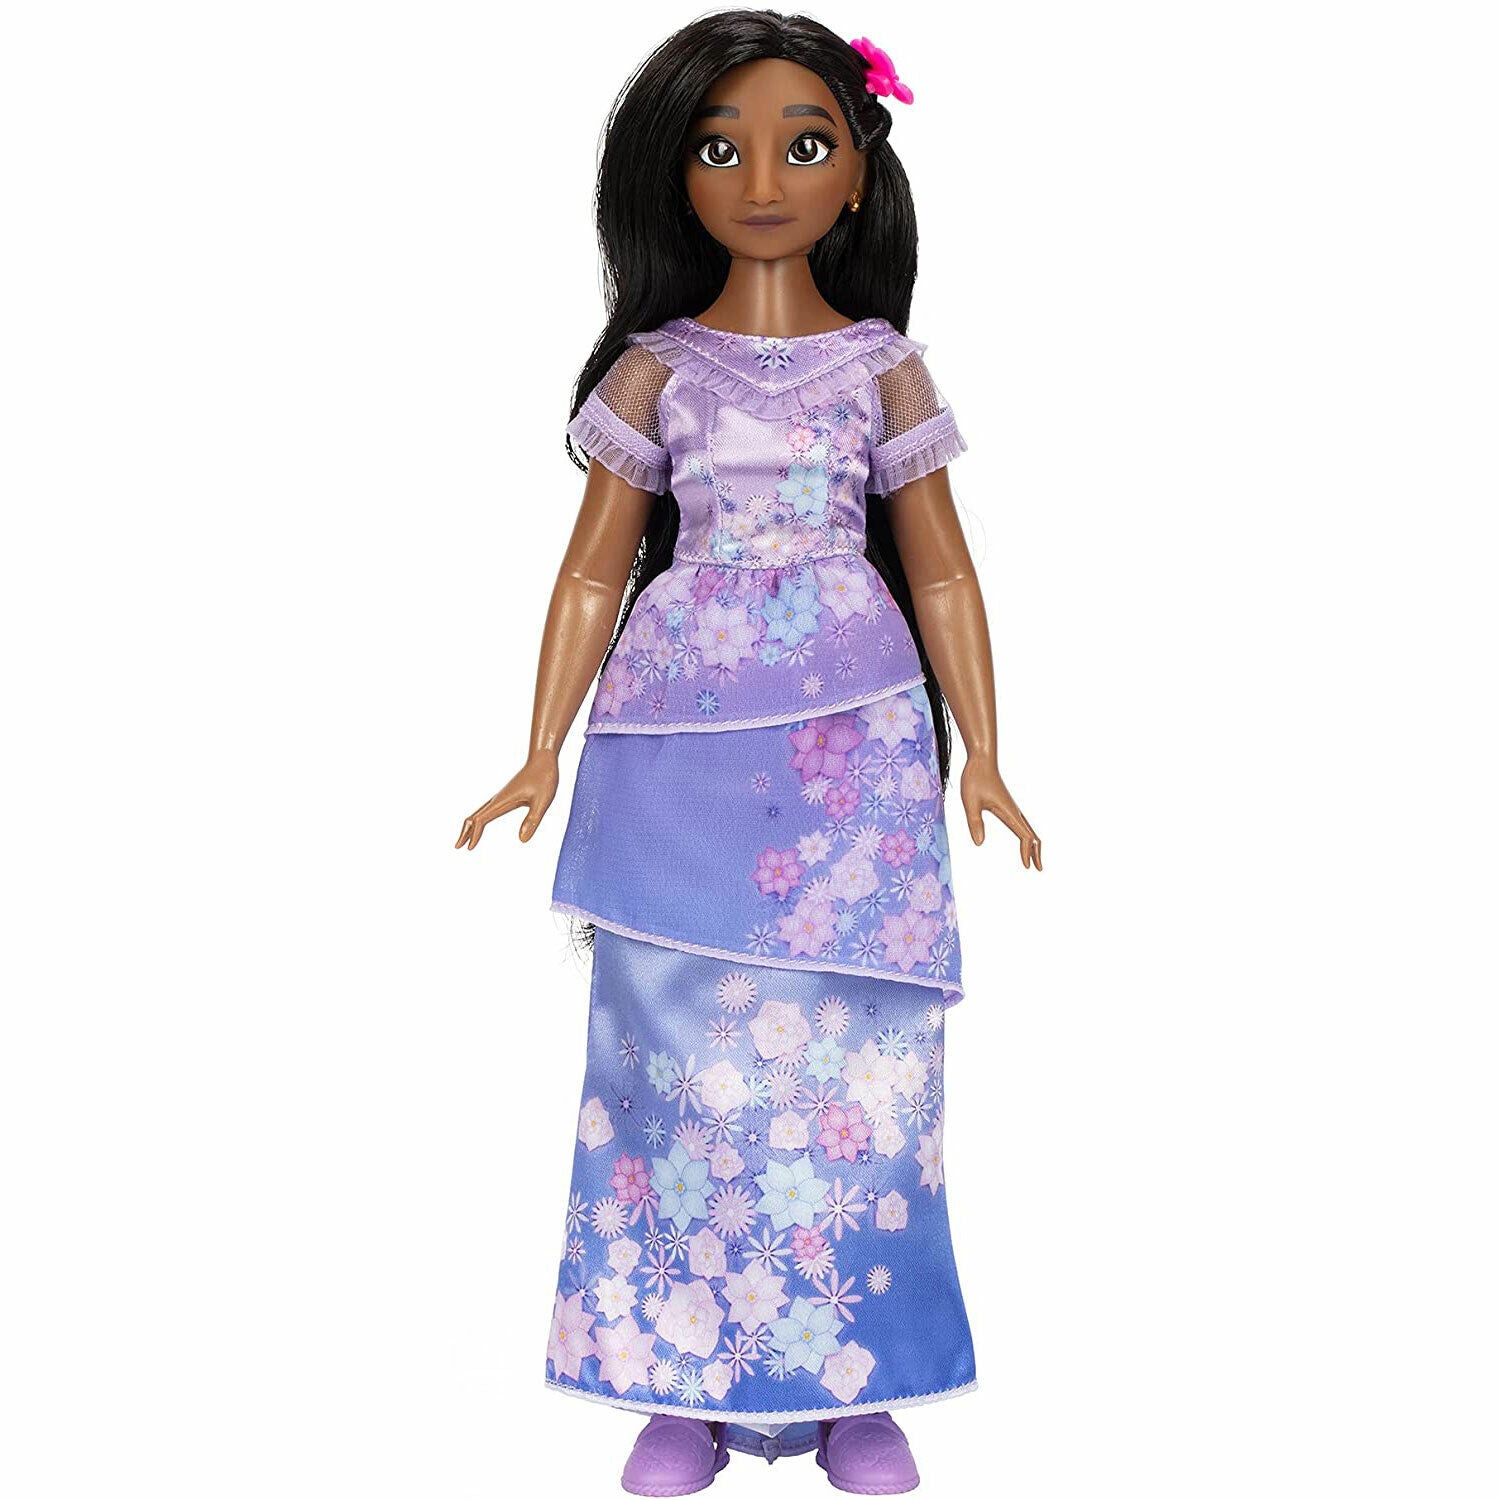 "Disney Encanto Isabela Madrigal 10" Fashion Doll - BRAND NEW - Free Shipping"